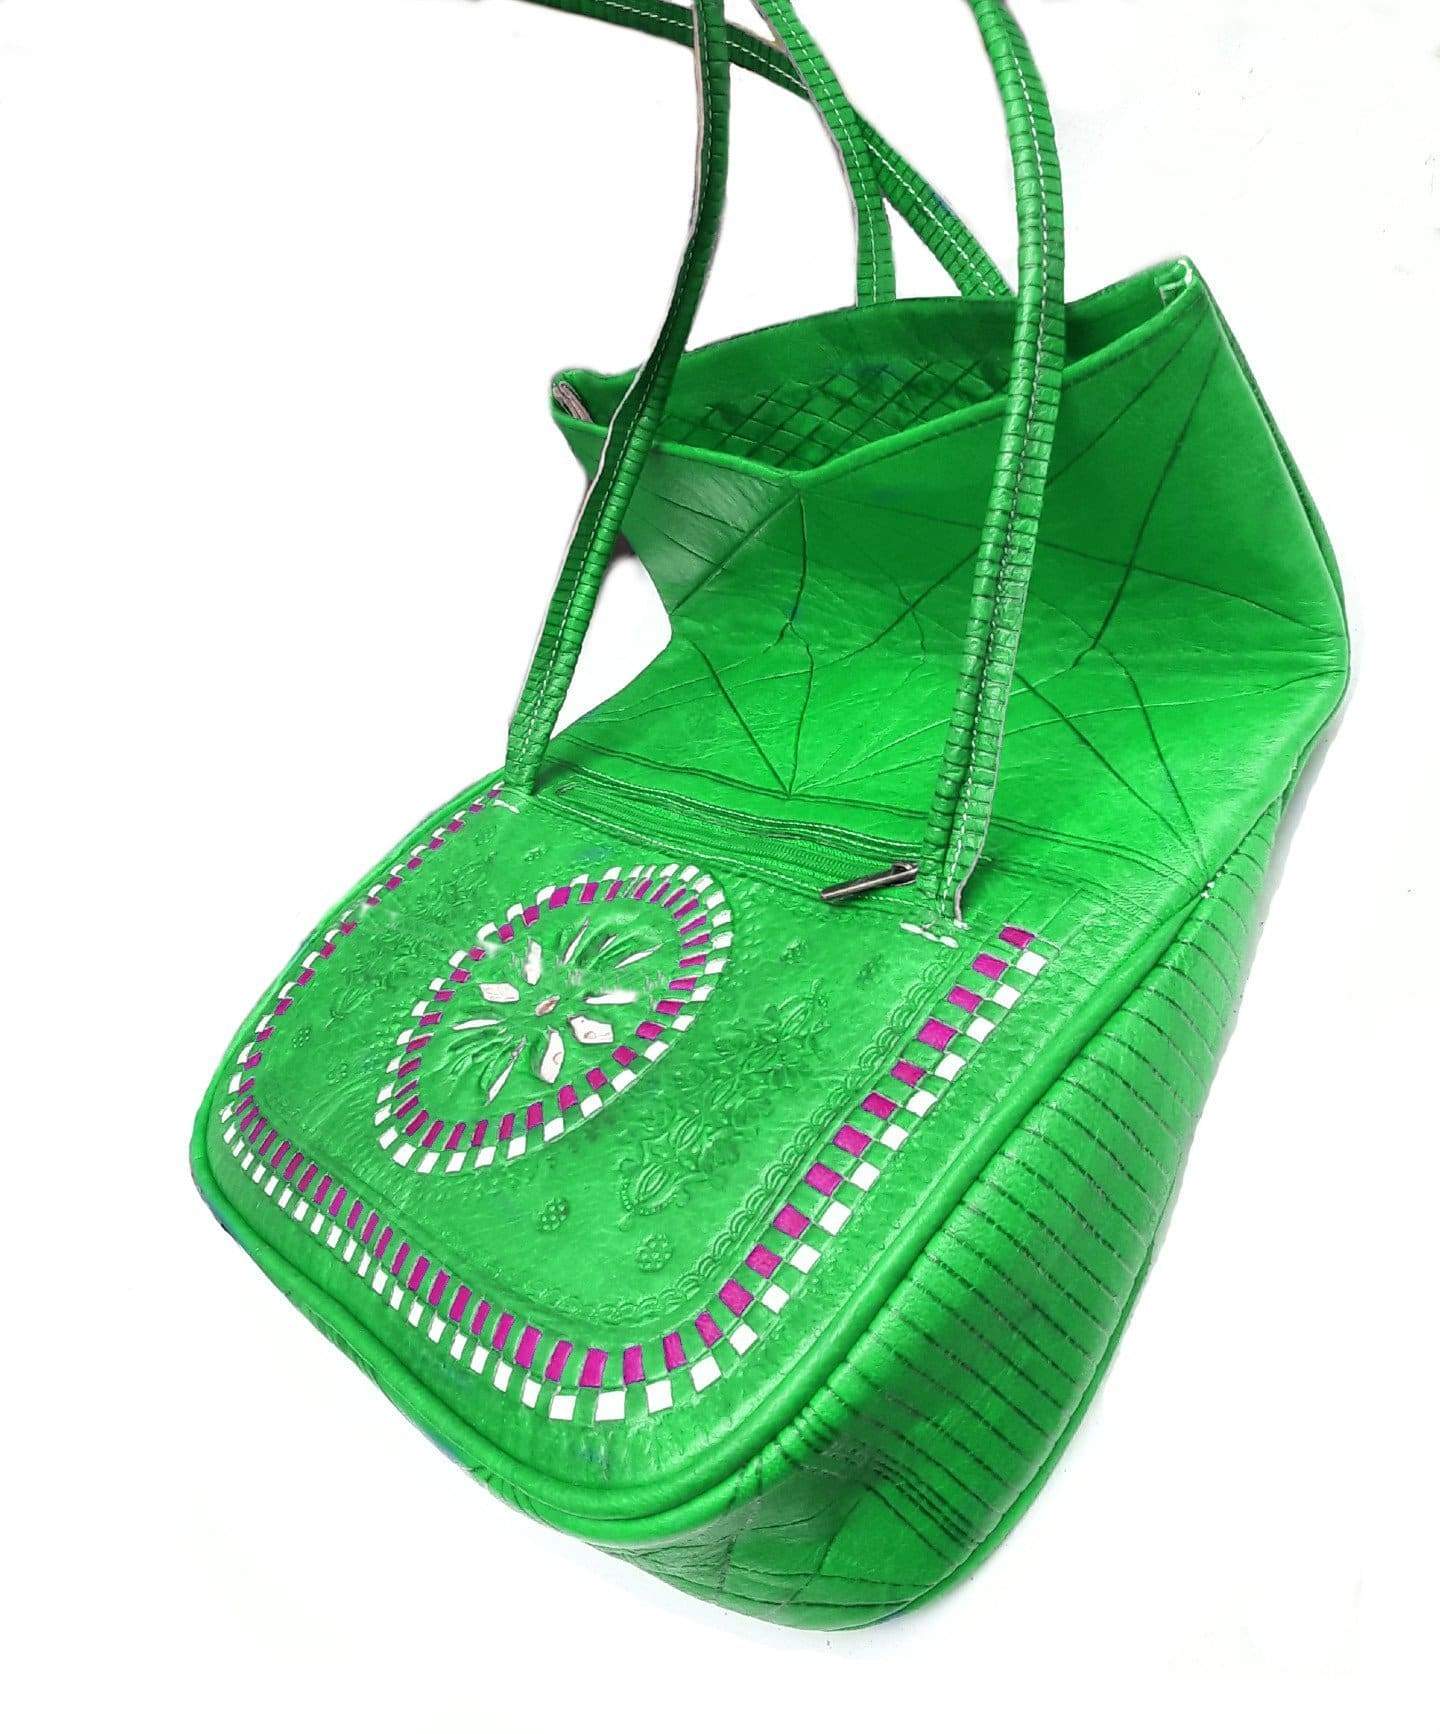 Braciano Womens Green Canvas Tote purse - beyond exchange